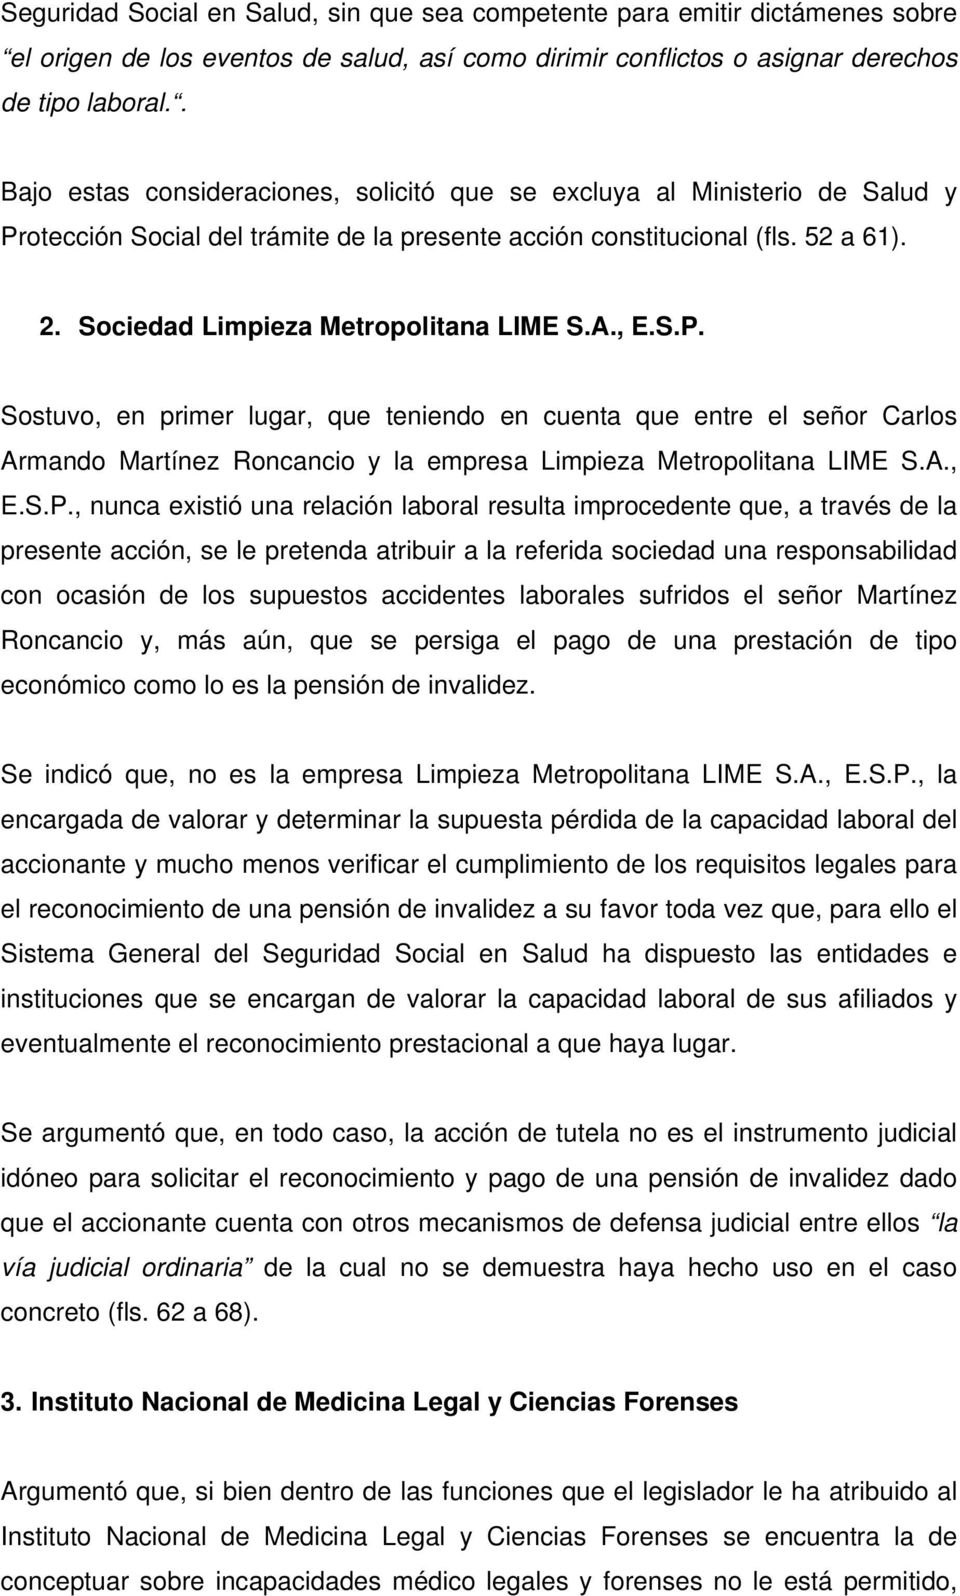 Sociedad Limpieza Metropolitana LIME S.A., E.S.P.